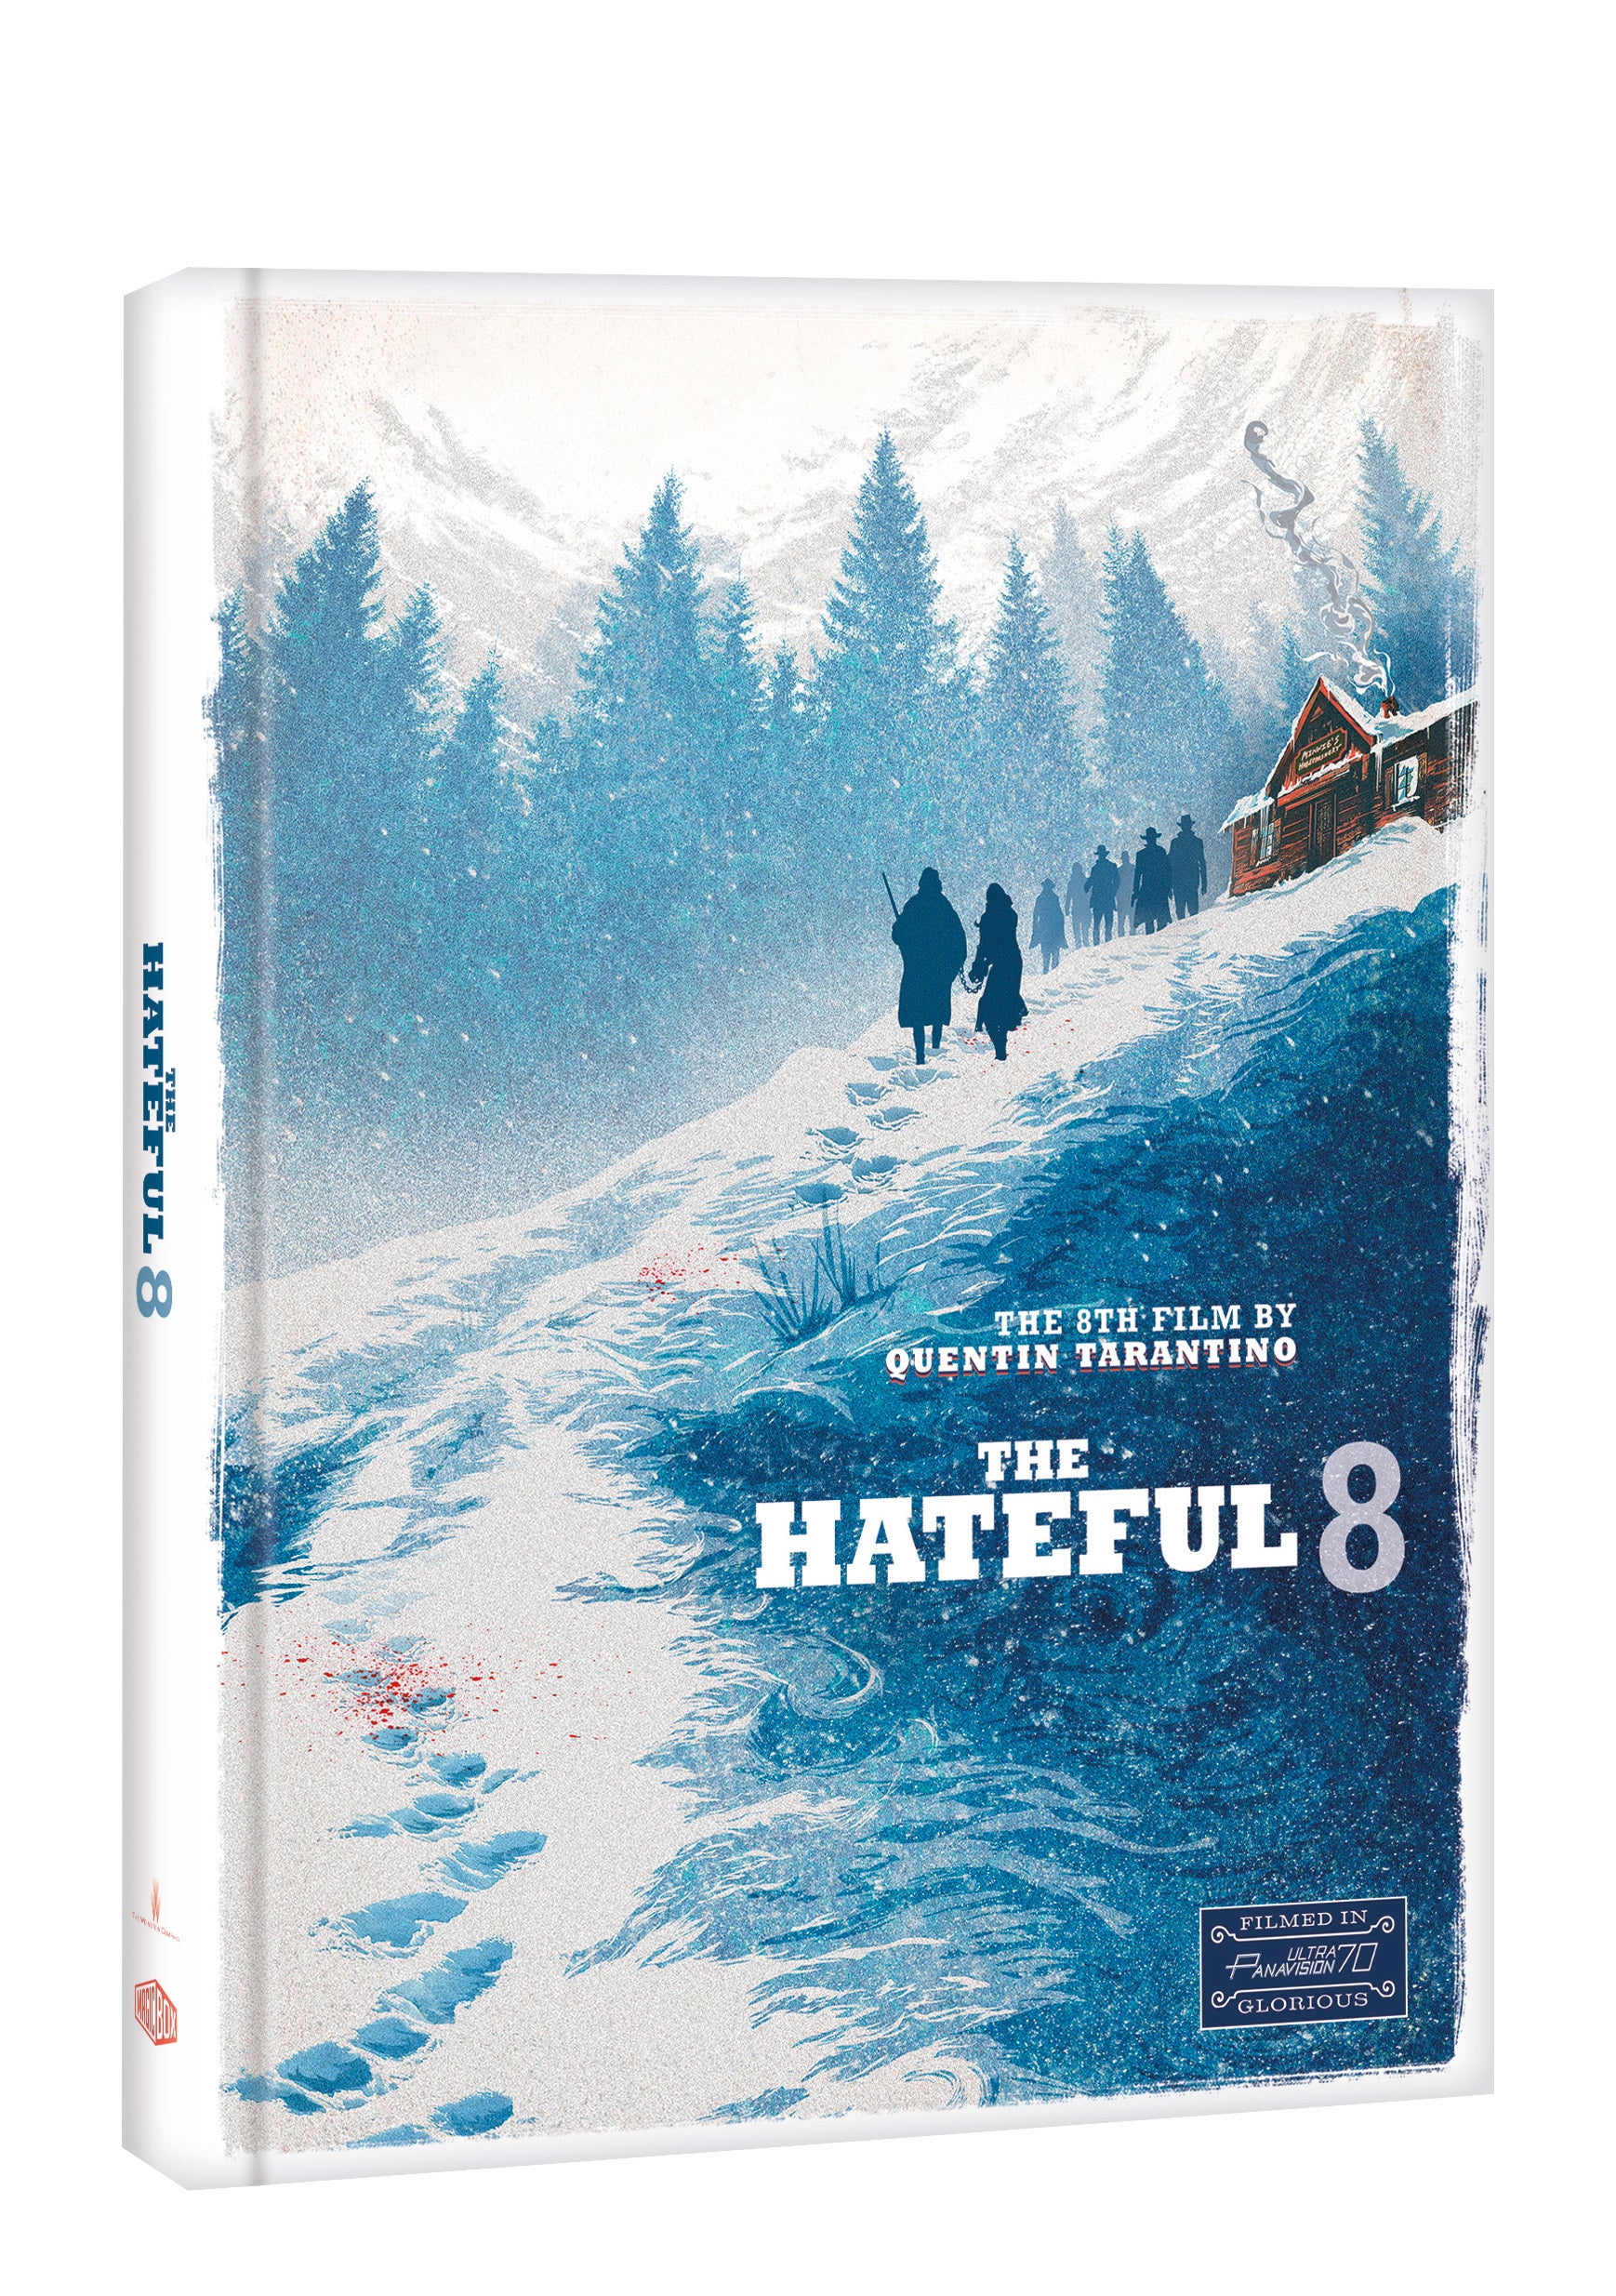 Osm hroznych - mediabook - limitovana edice DVD / The Hateful Eight